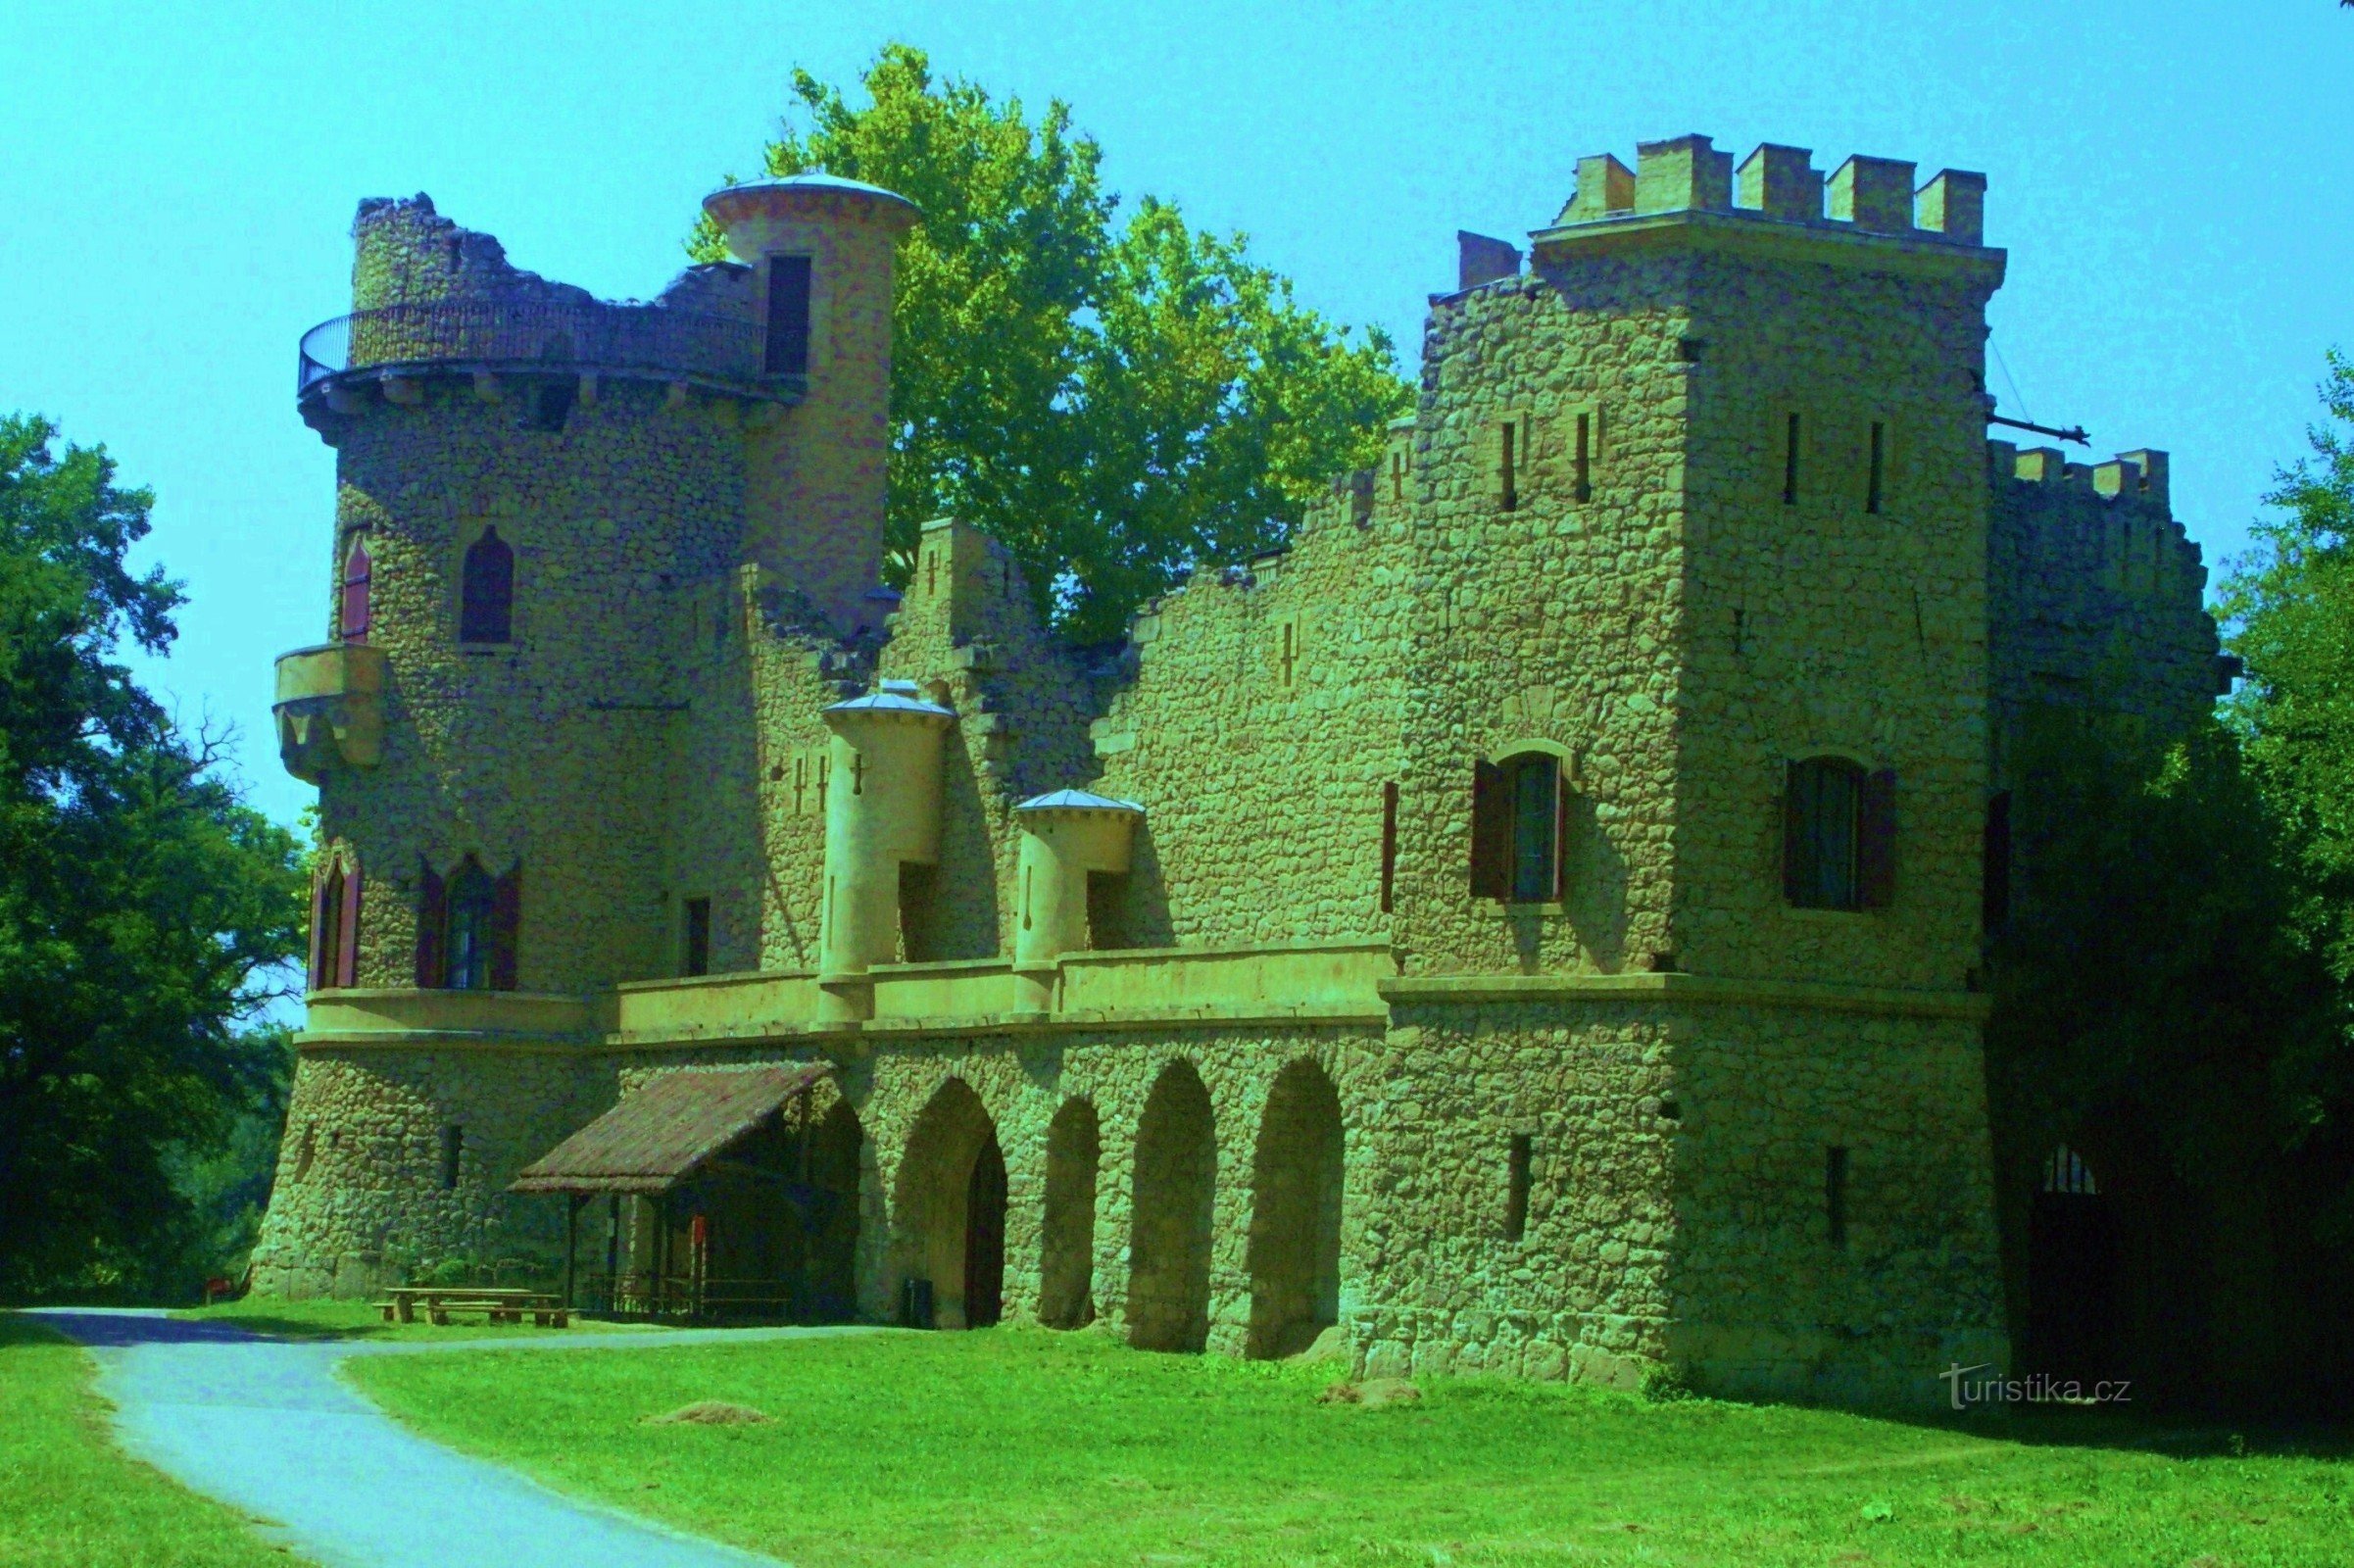 Naar John's Castle